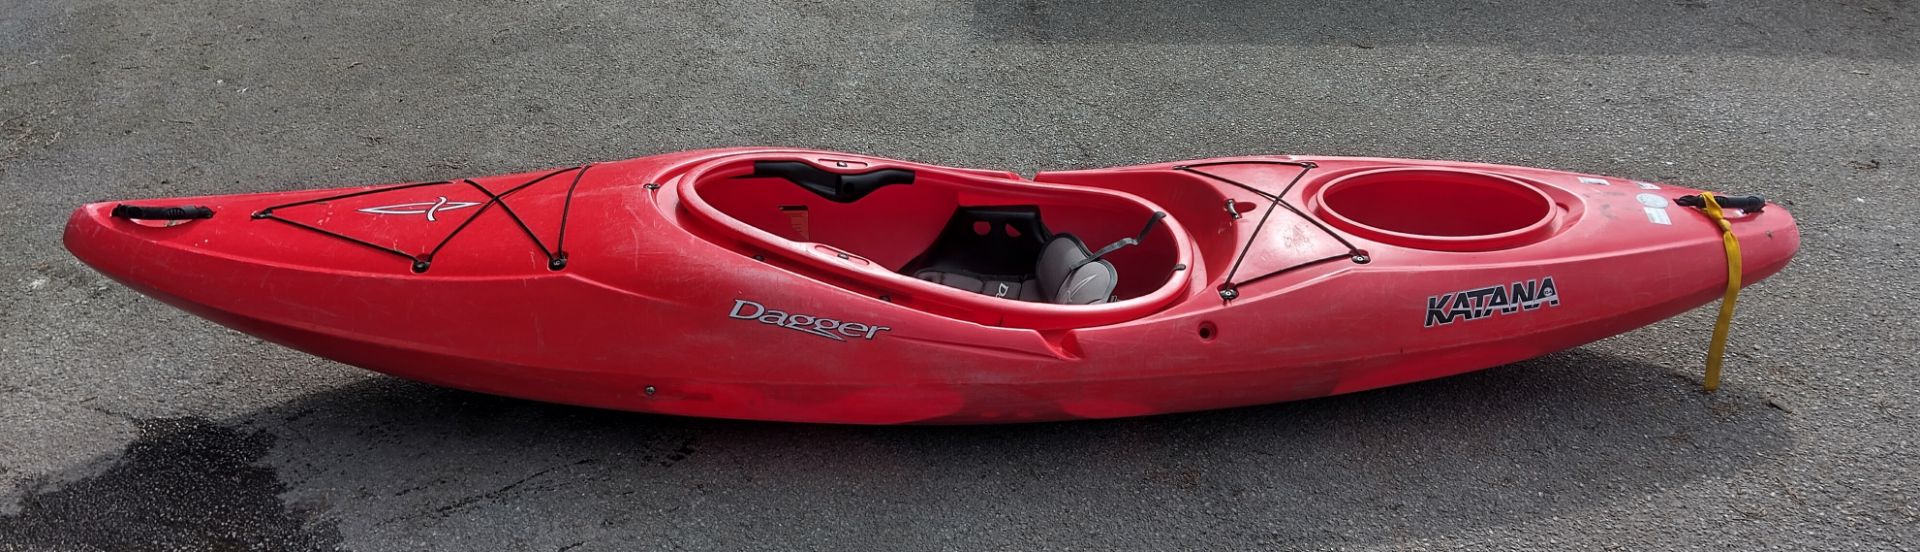 Dagger Kayak polyethylene - W 3200 x D 660 x H 420 mm - RED - Image 2 of 2